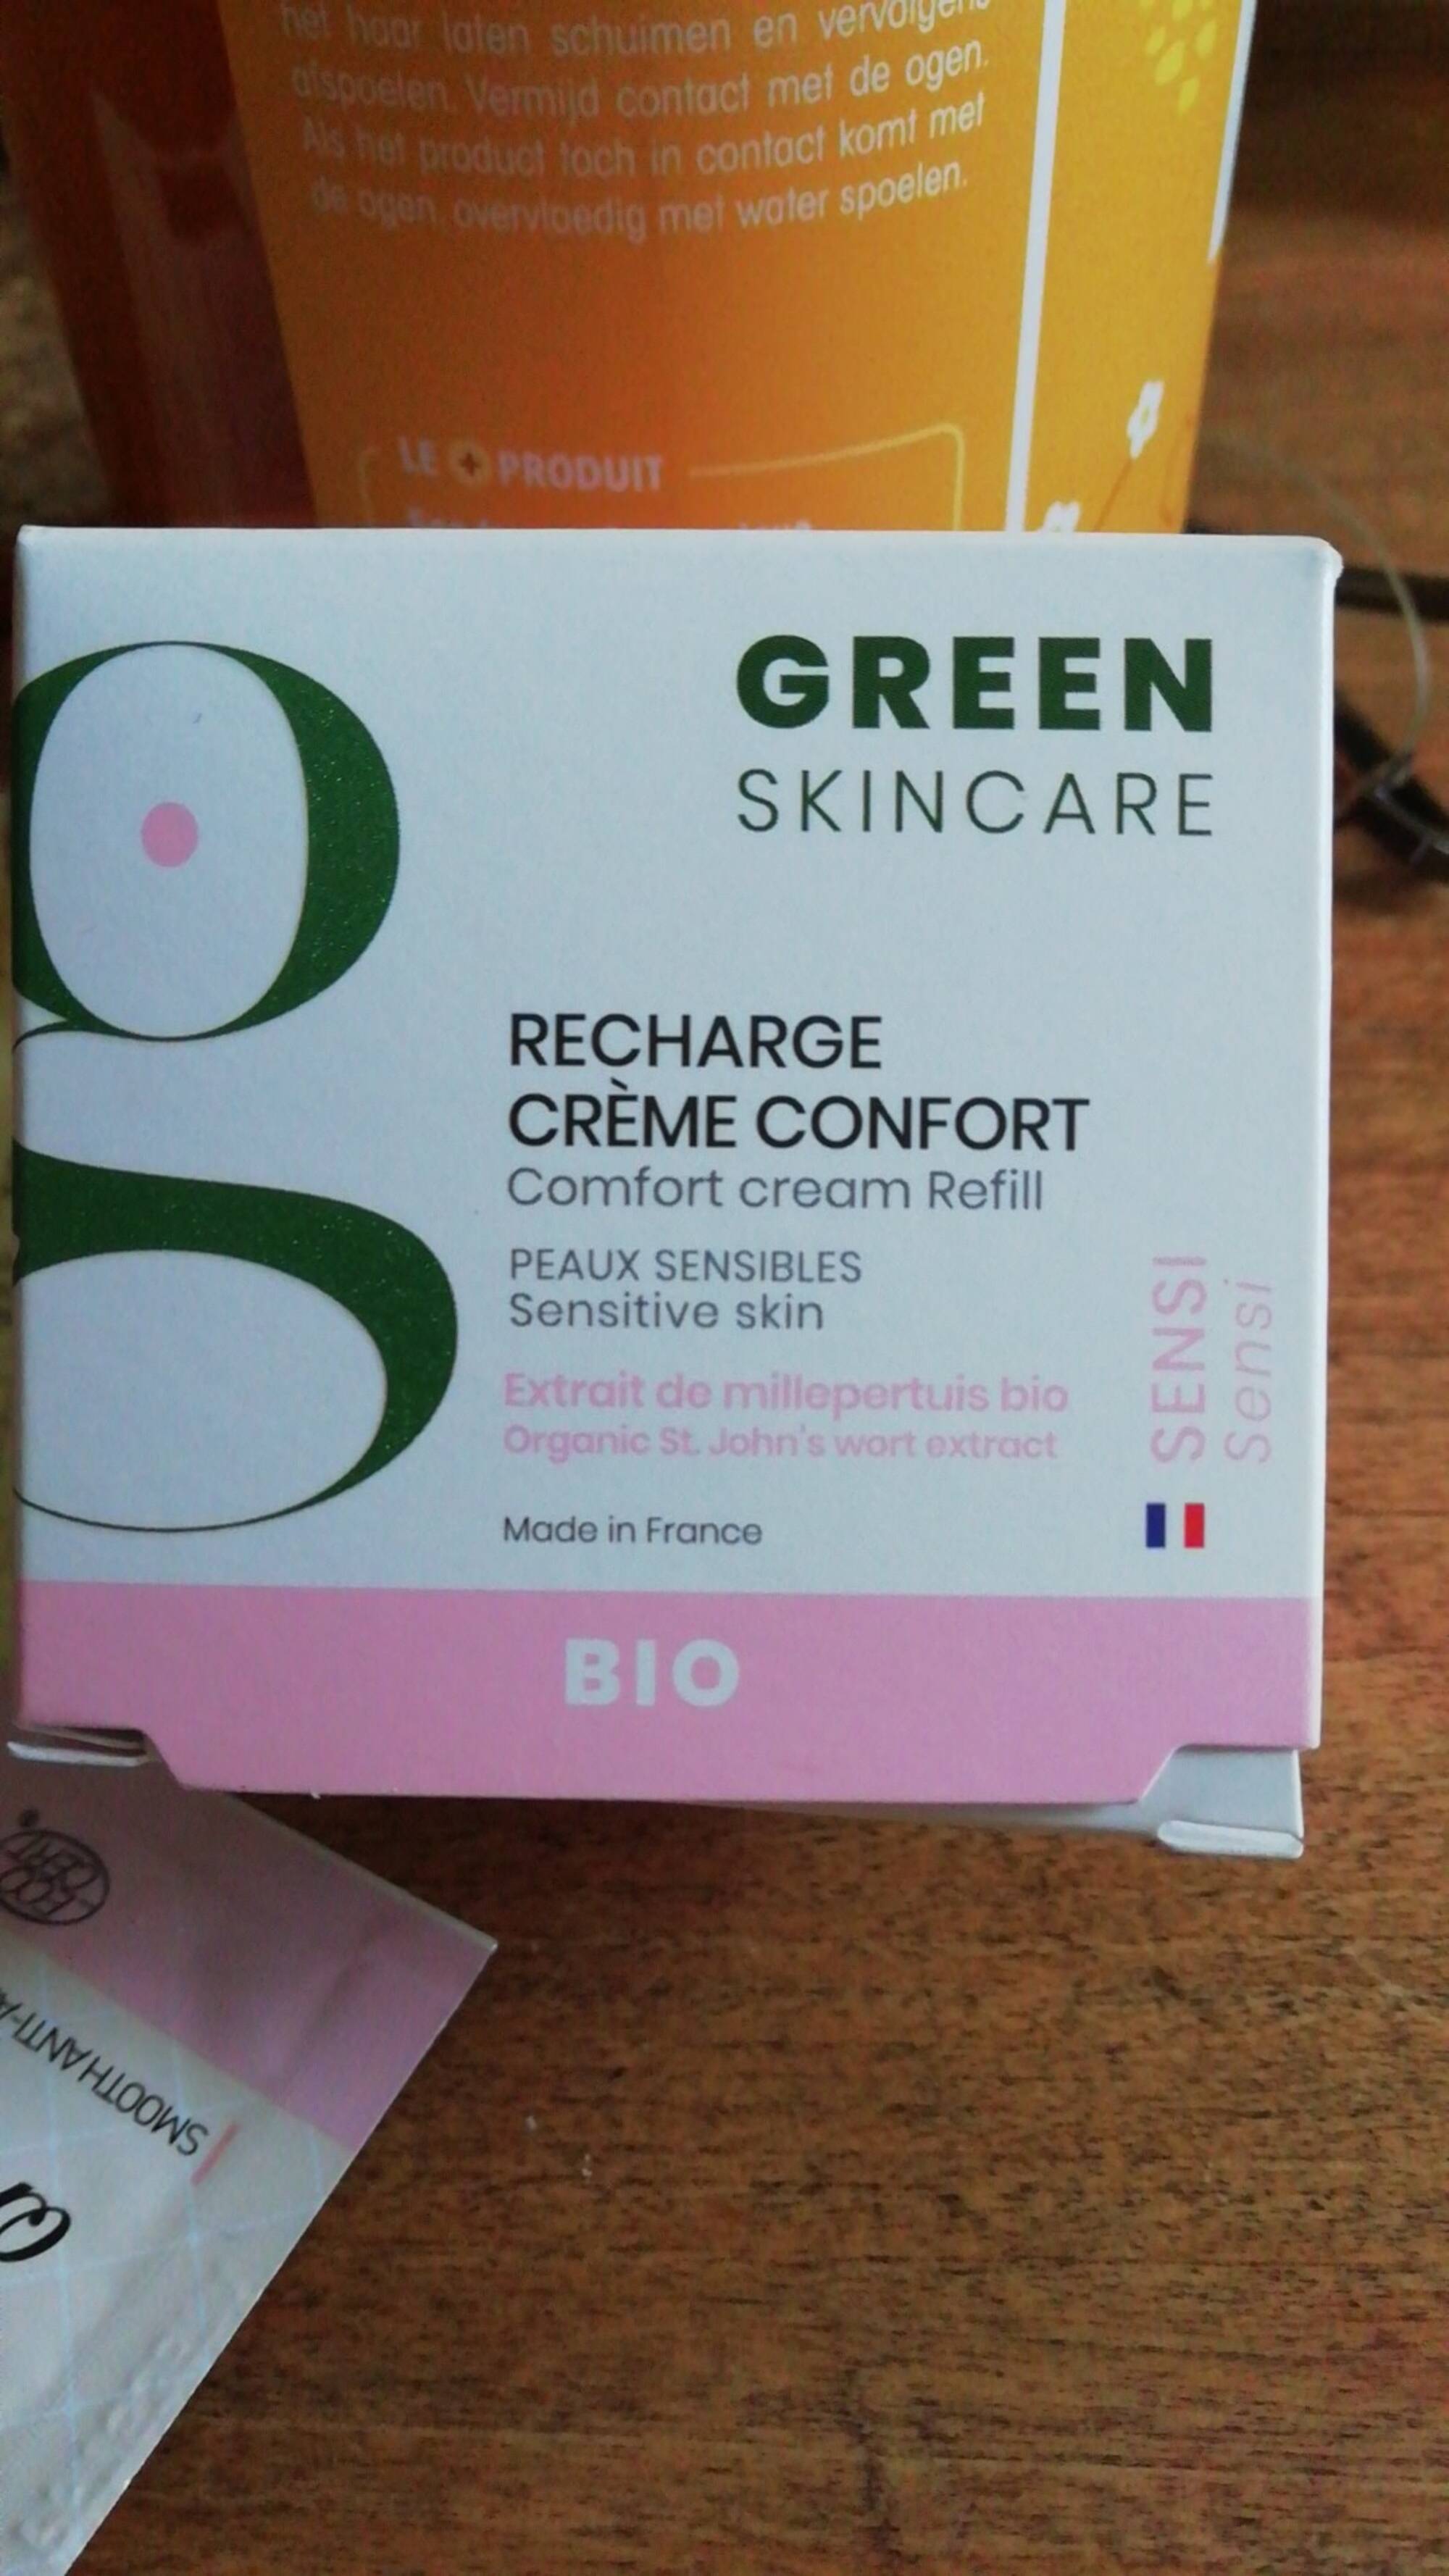 GREEN SKINCARE - Recharge crème confort